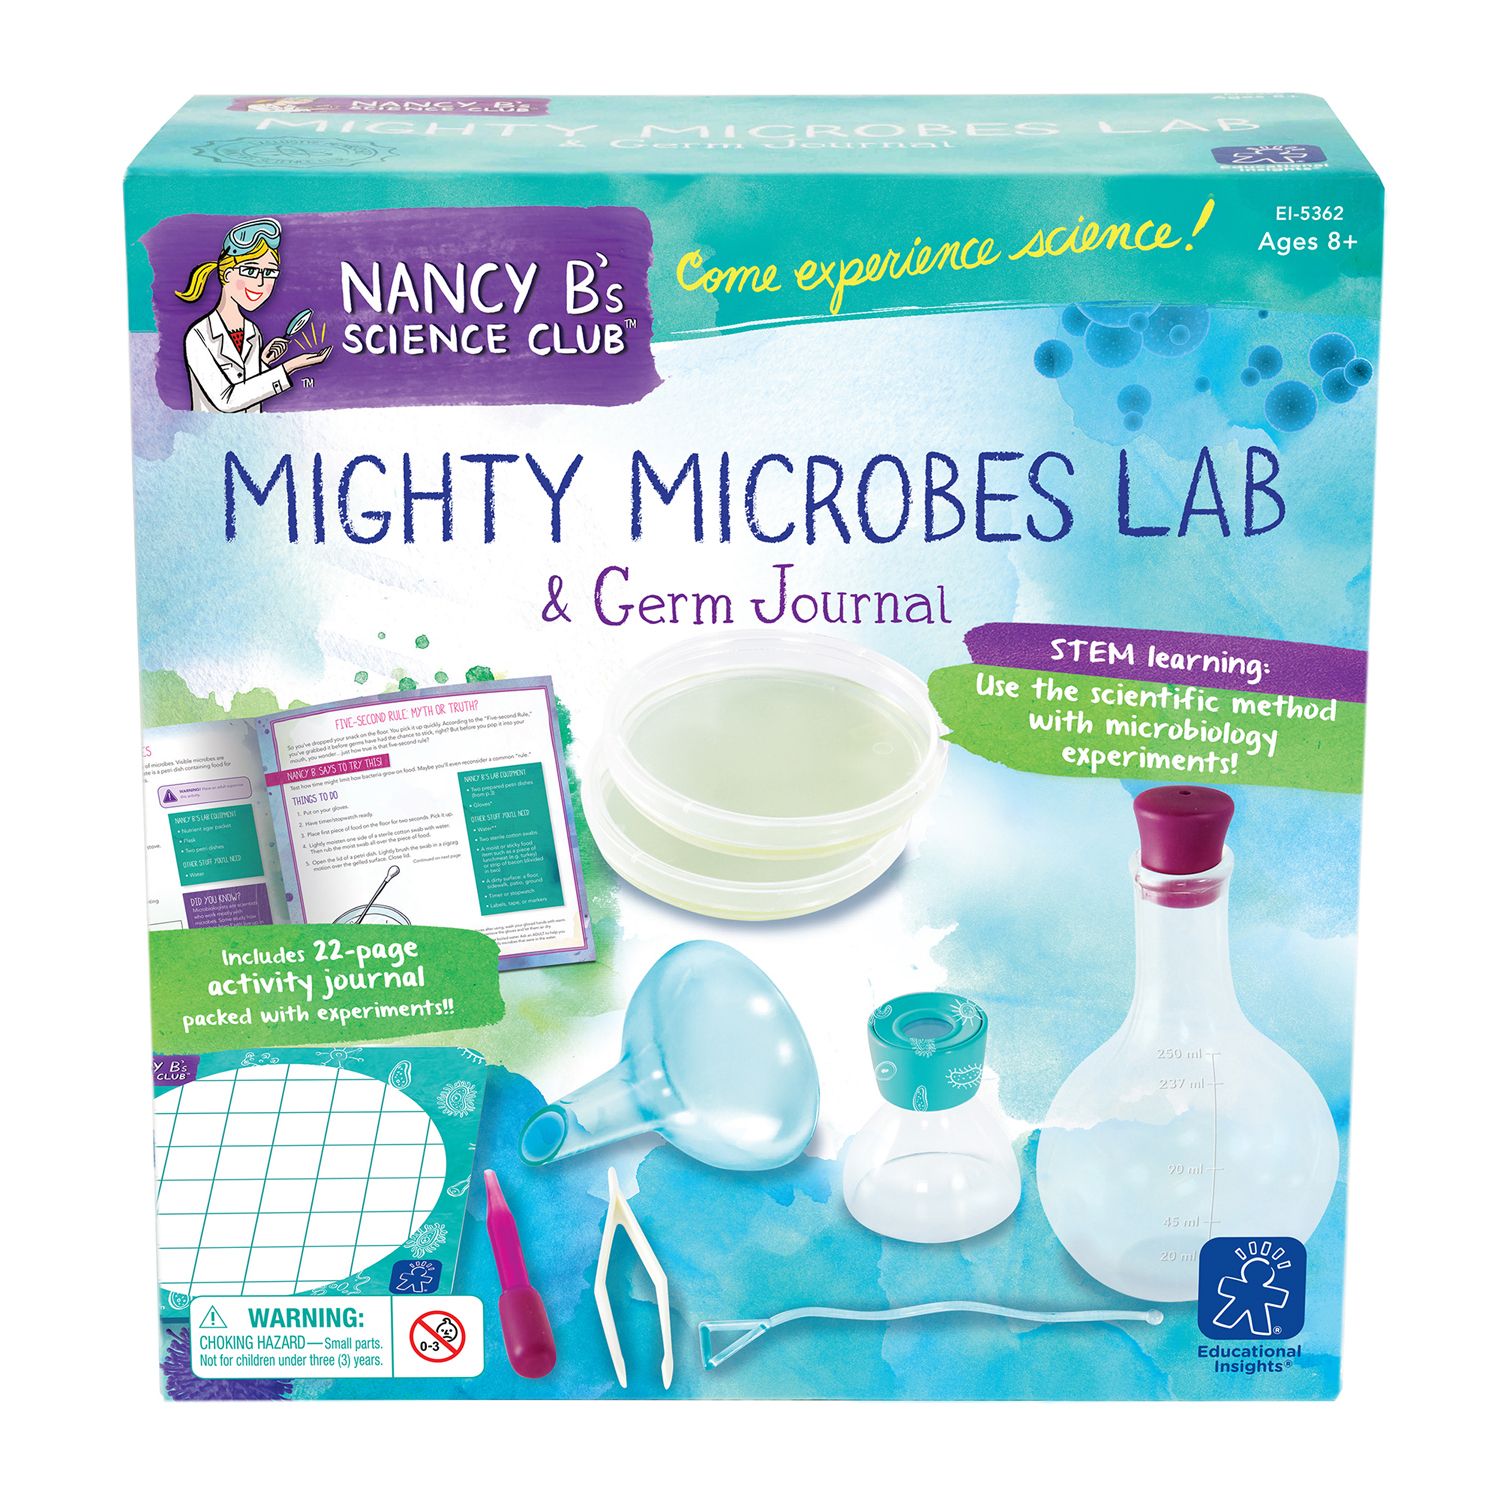 Nancy b's science club microscope & activity journal –